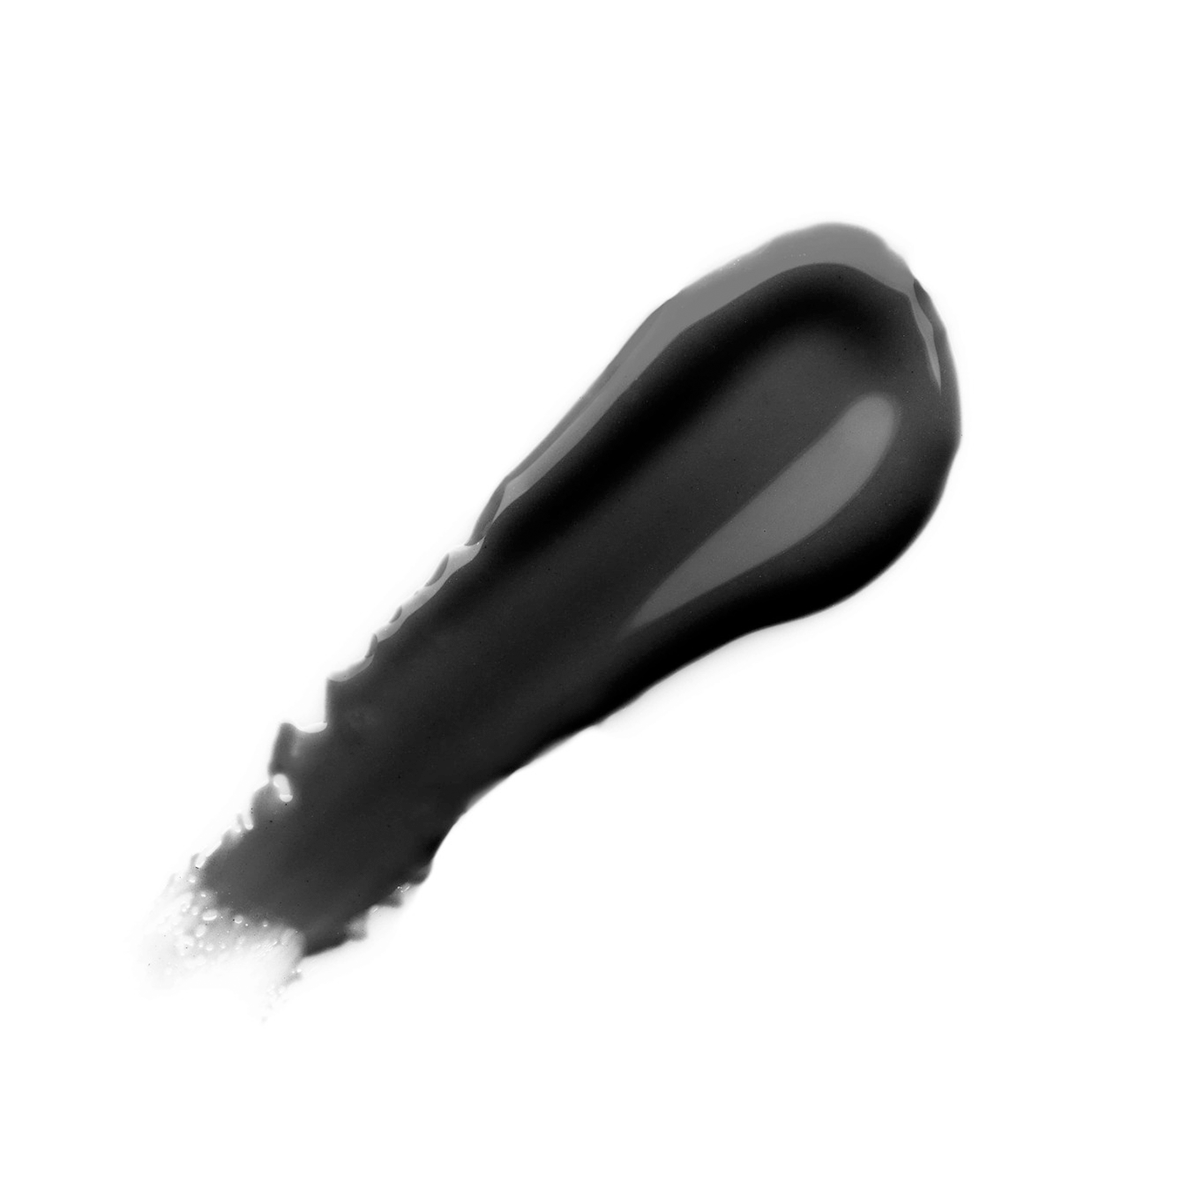 TON - SHEER INKY BLACK - high shine lip gloss in sheer inky black shade